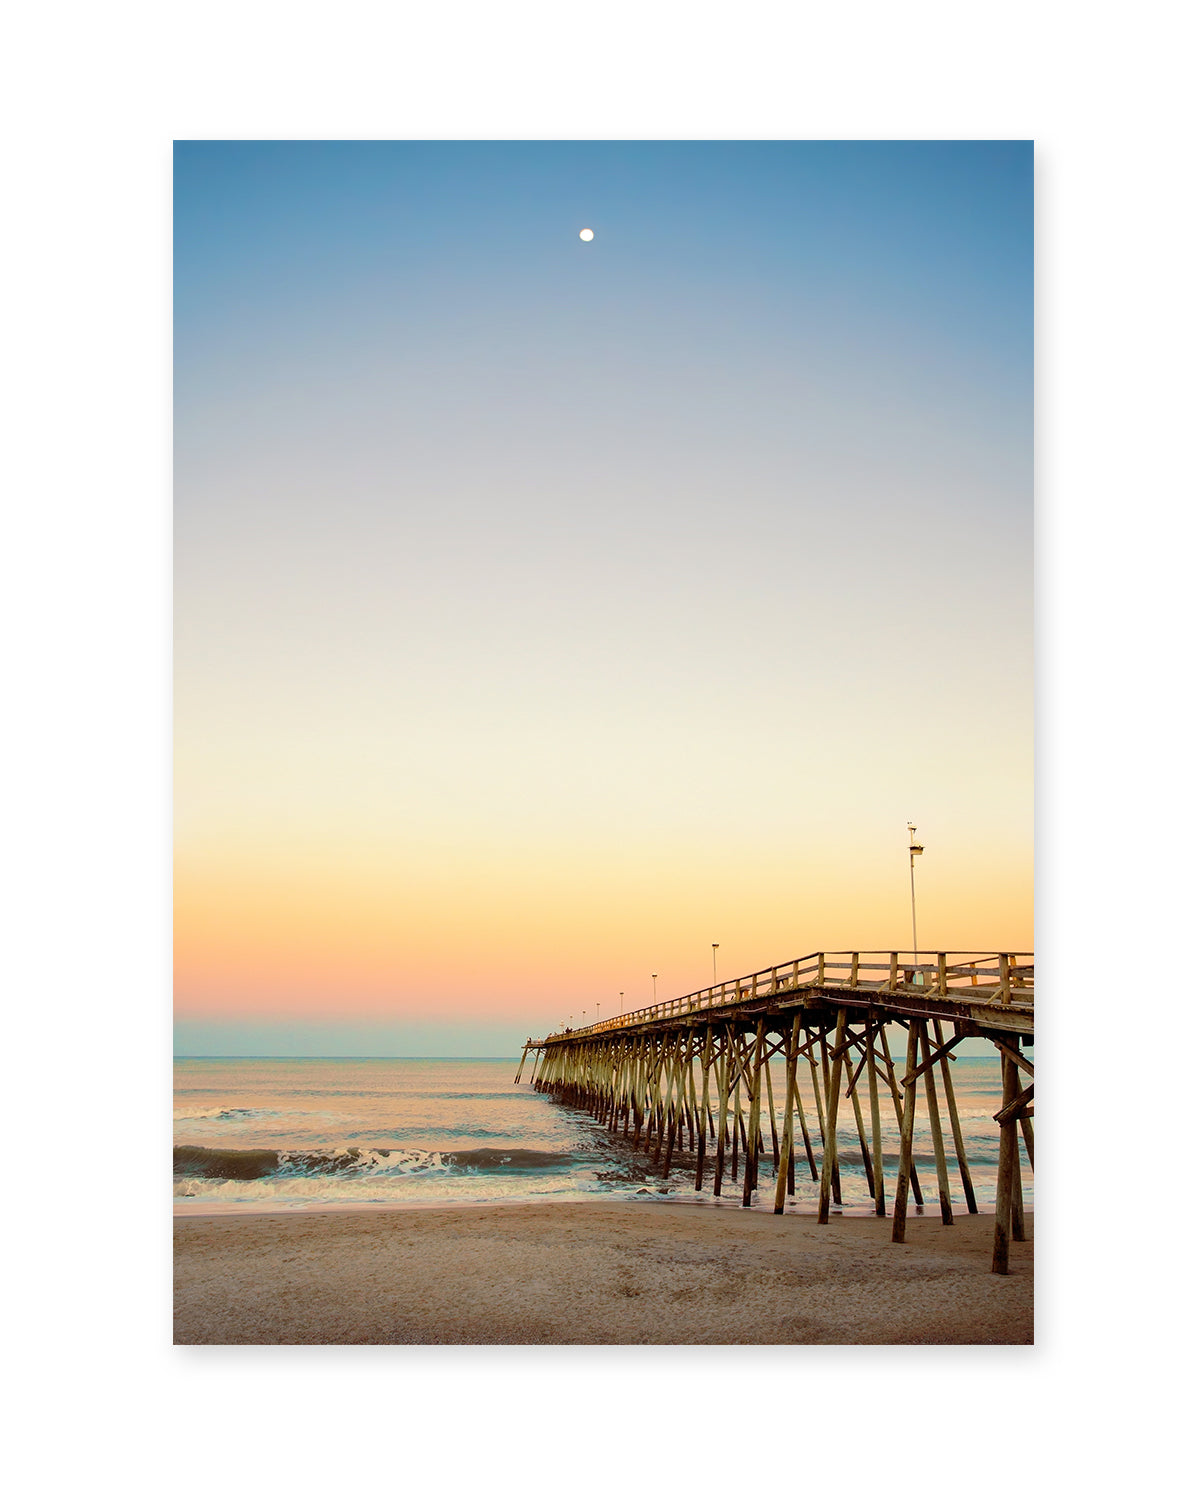 Kure Beach Pier, Warm Beach Sunset, Wright and Roam Photograph